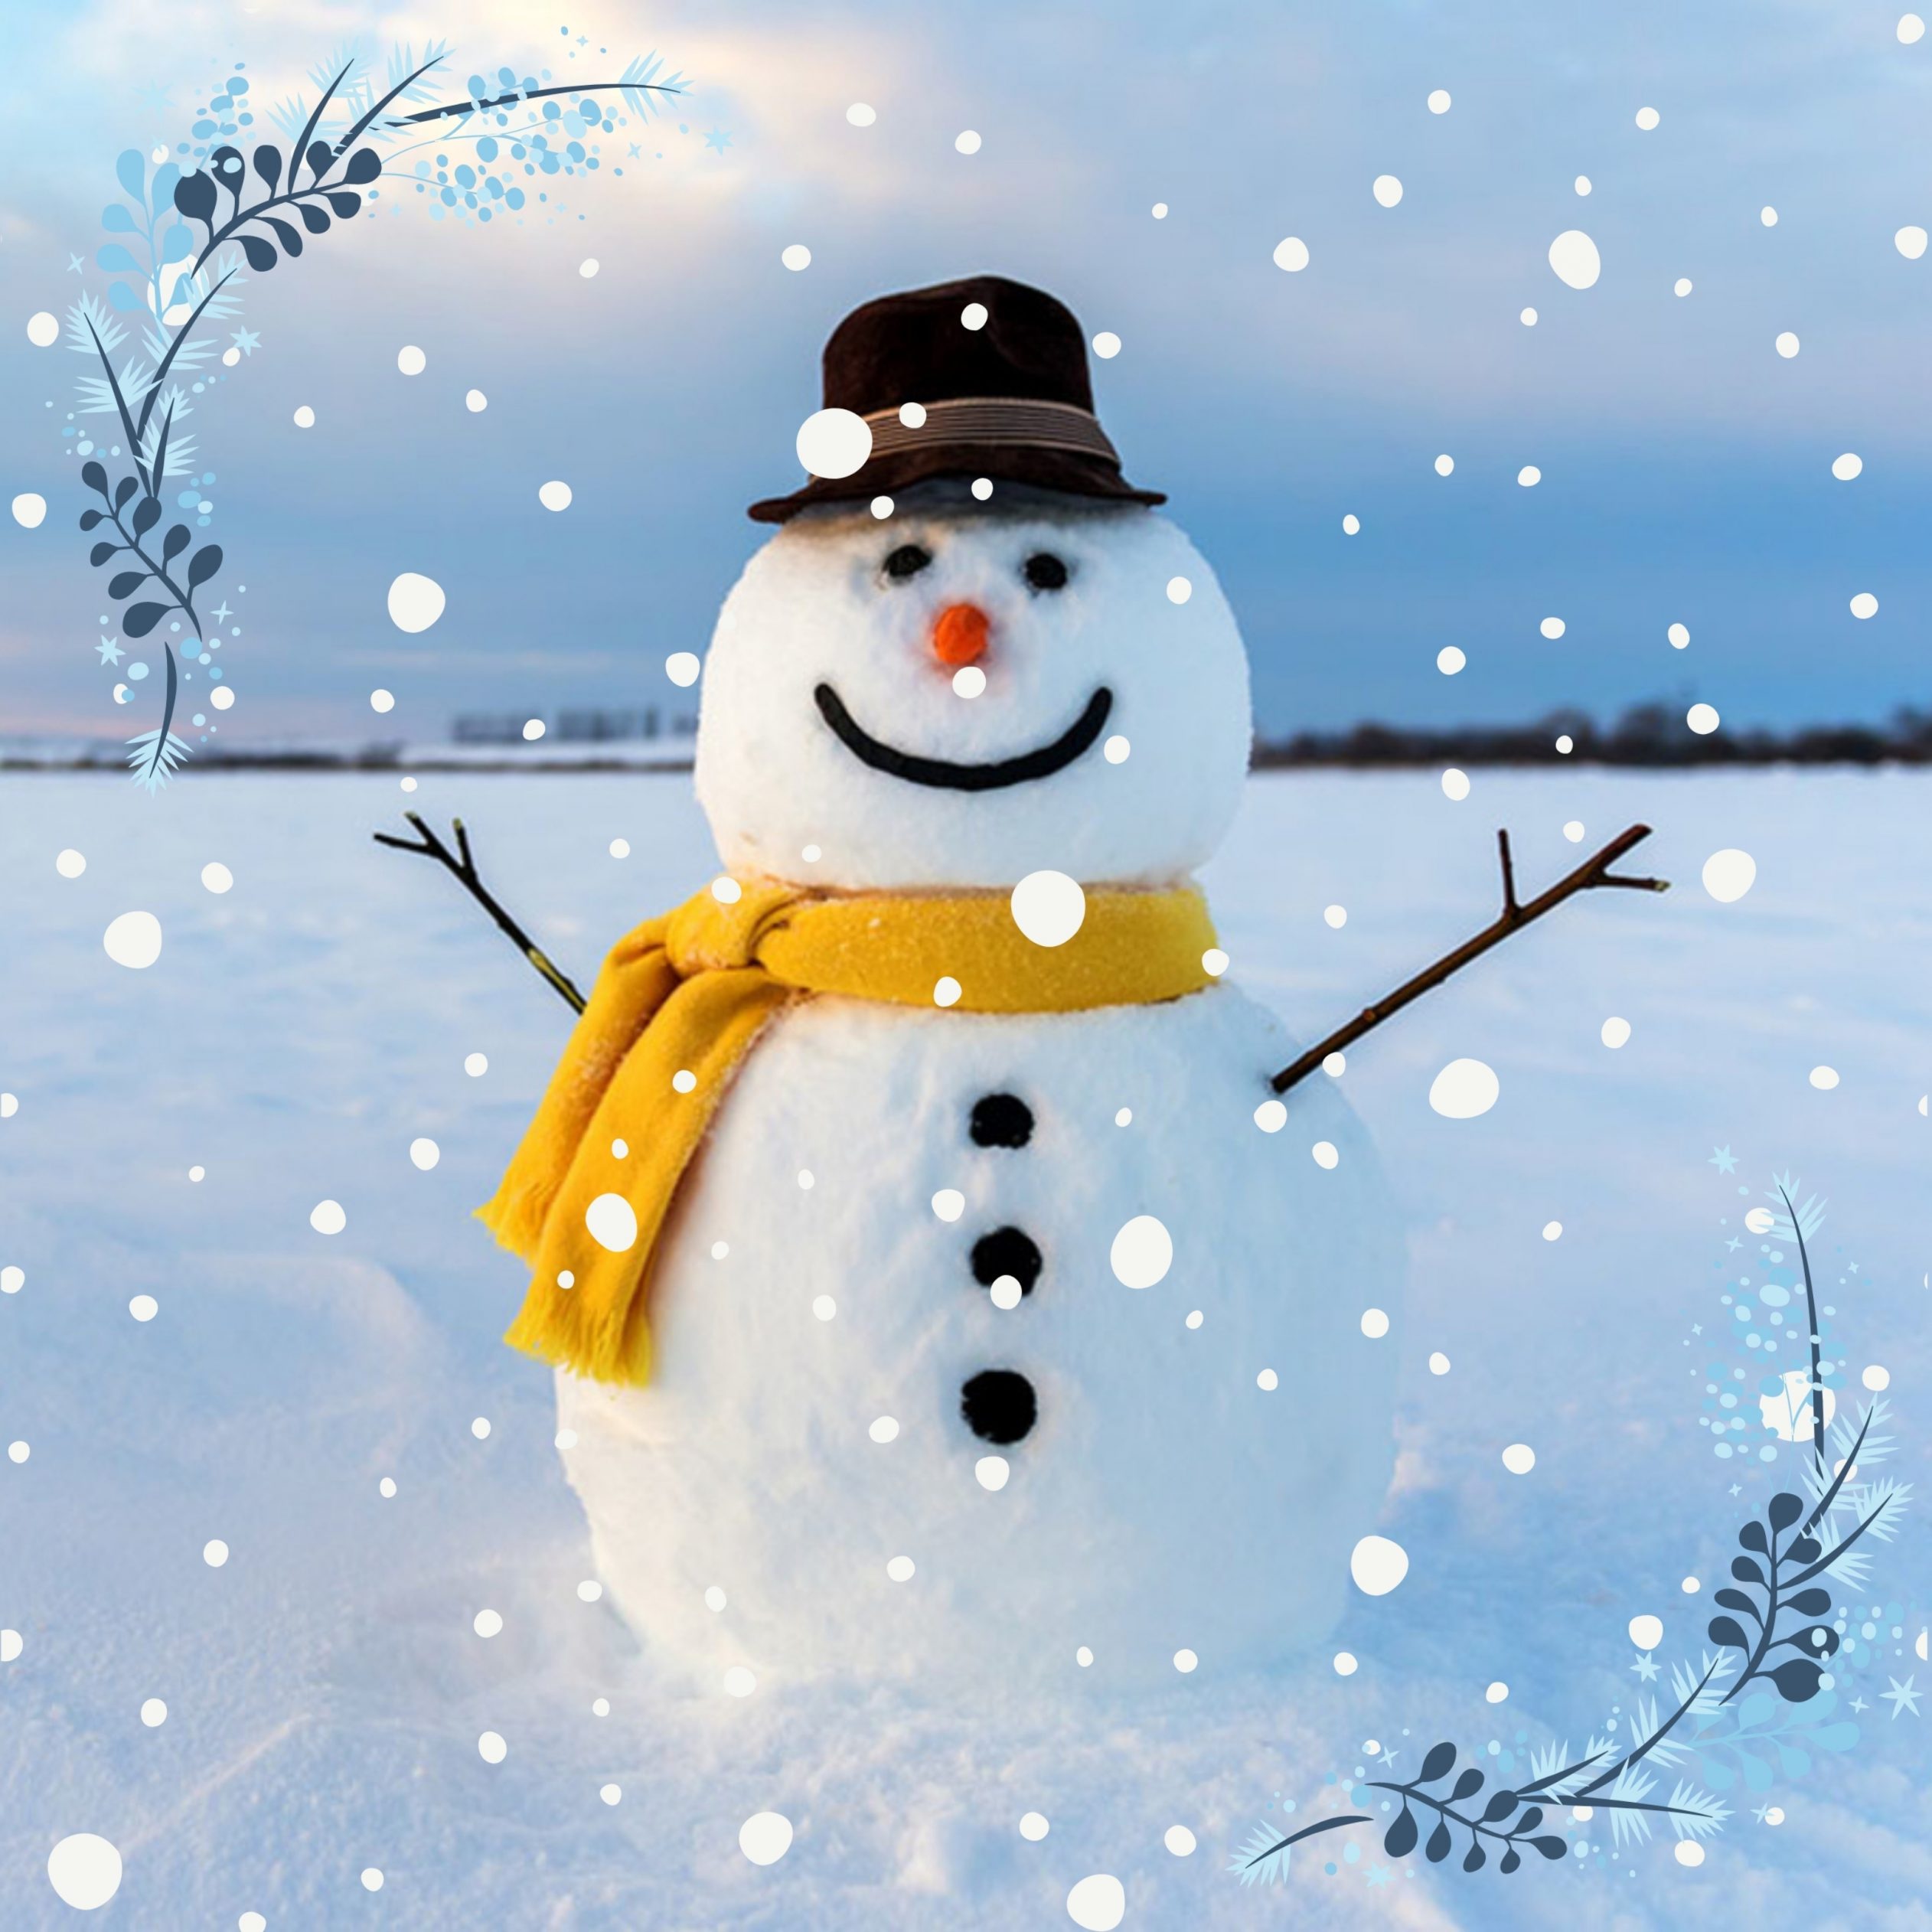 200+] Snowman Wallpapers | Wallpapers.com